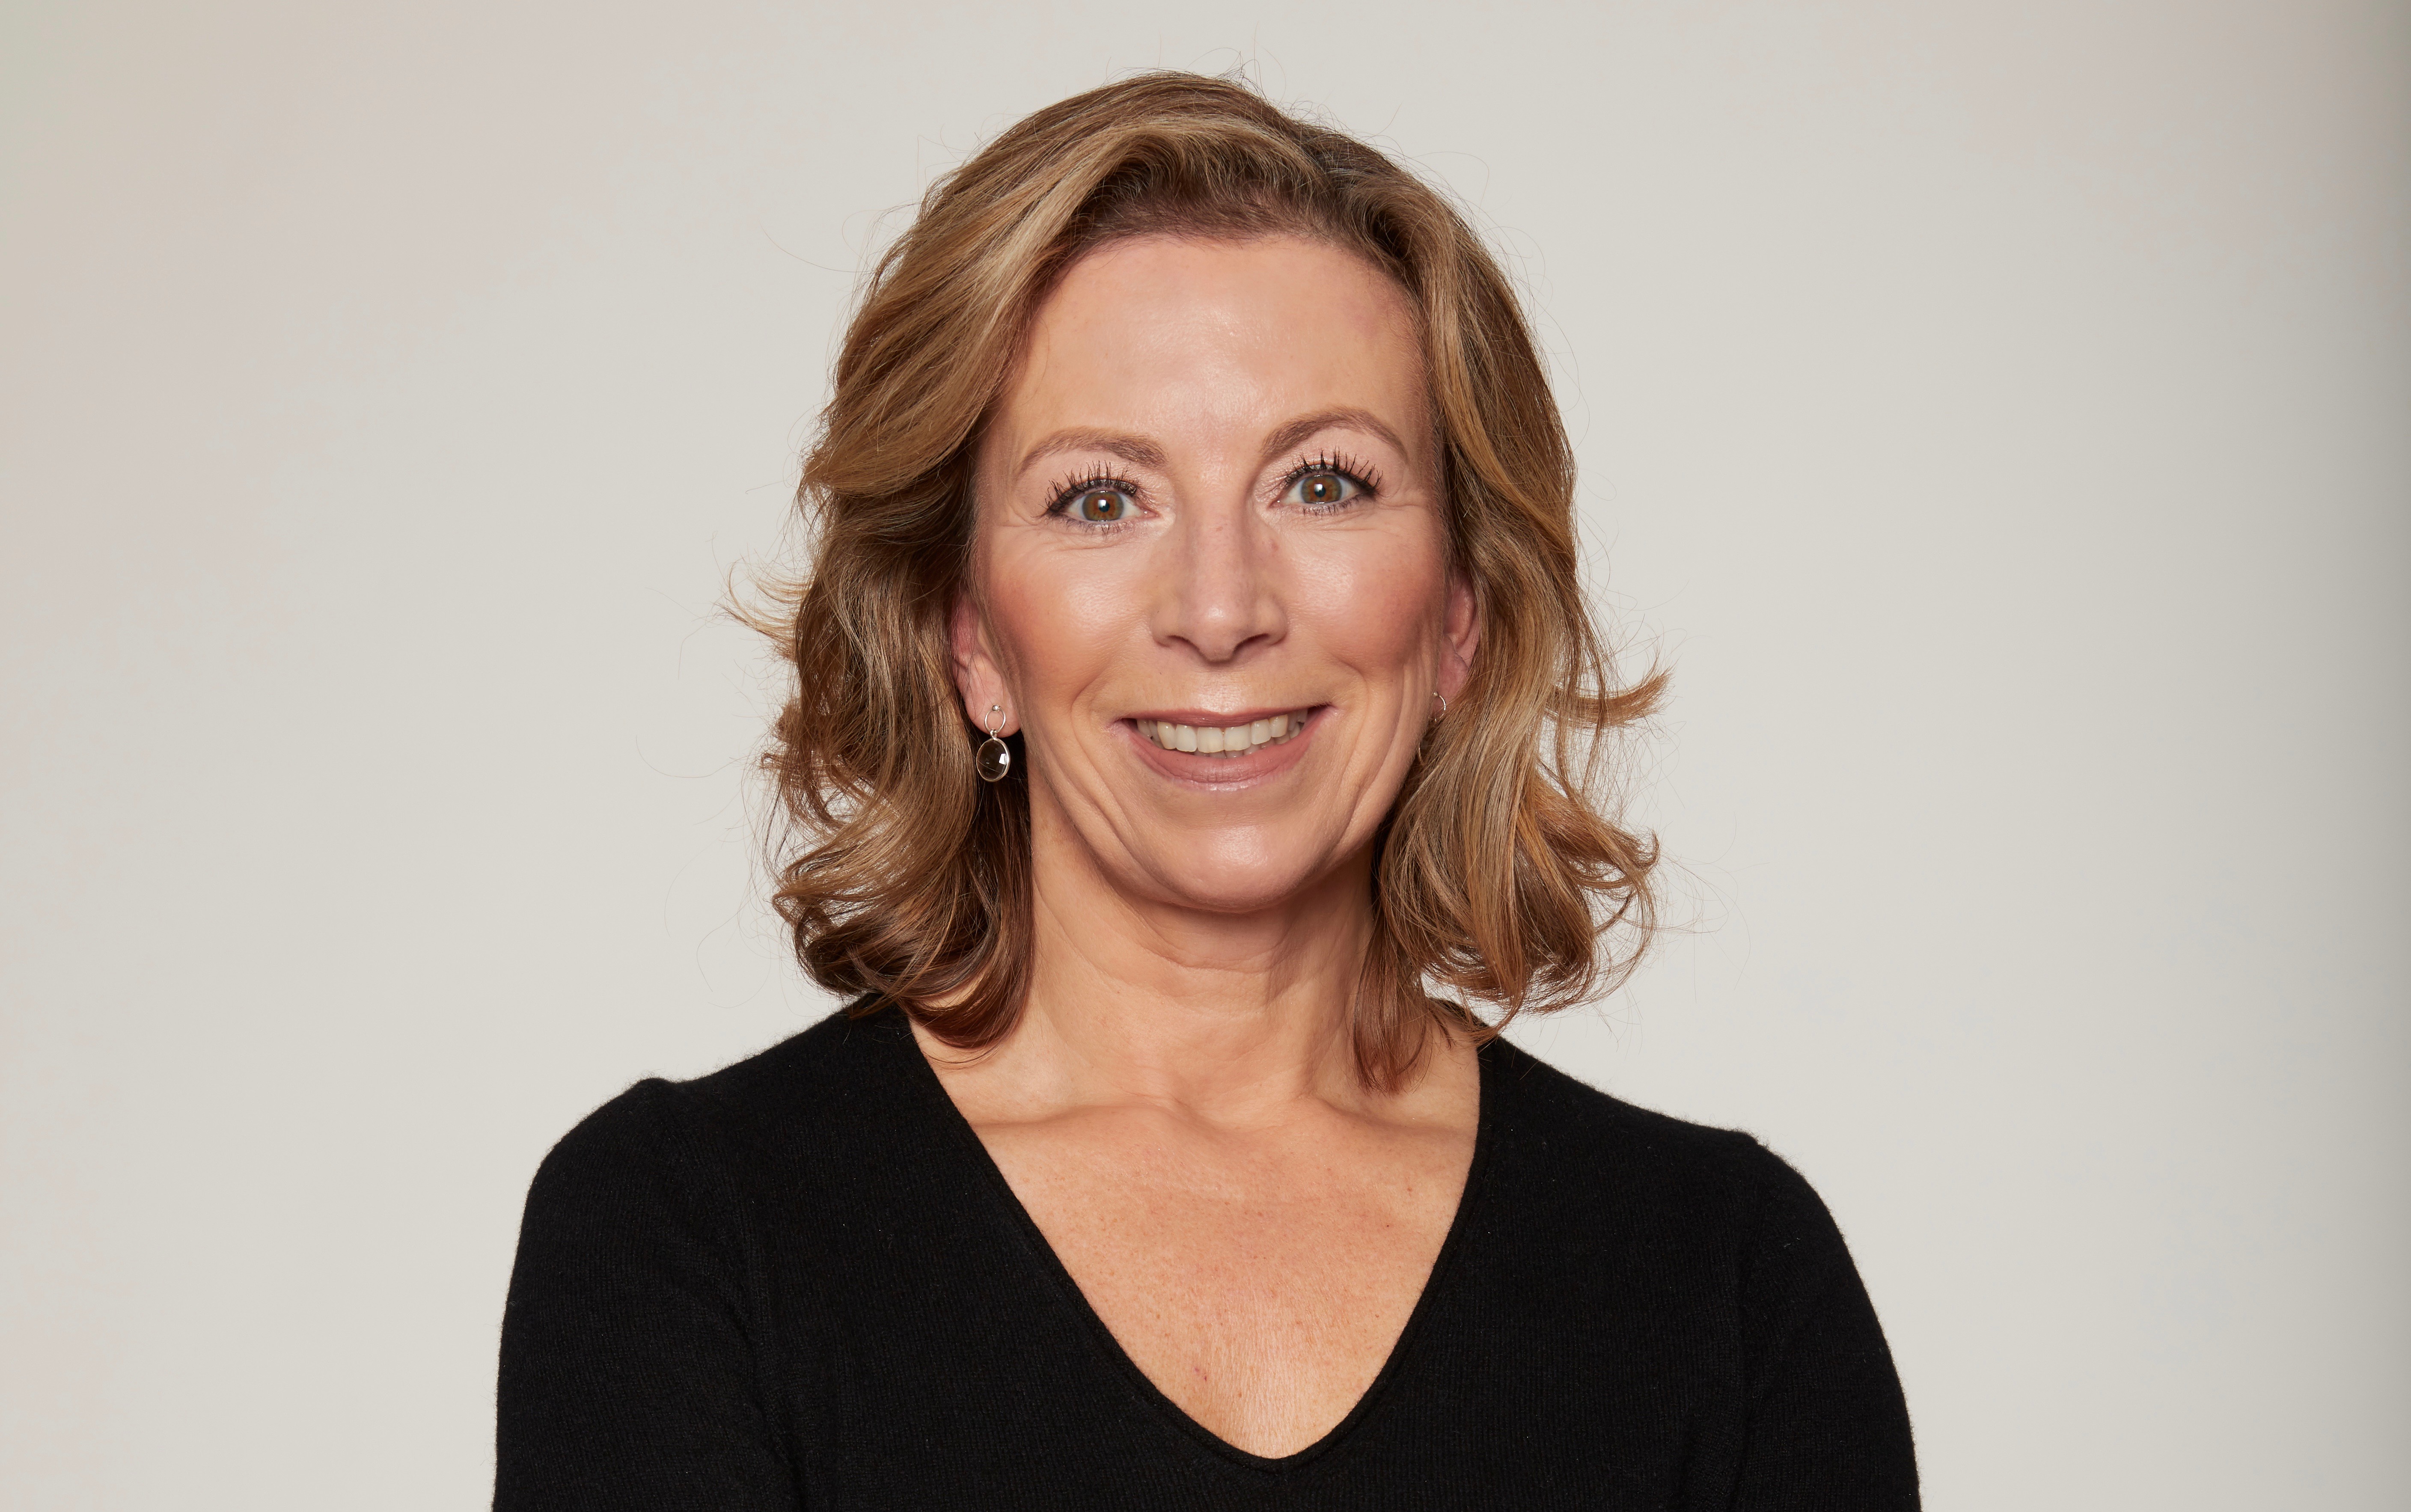 FDP-Stadträtin Stefanie Knecht